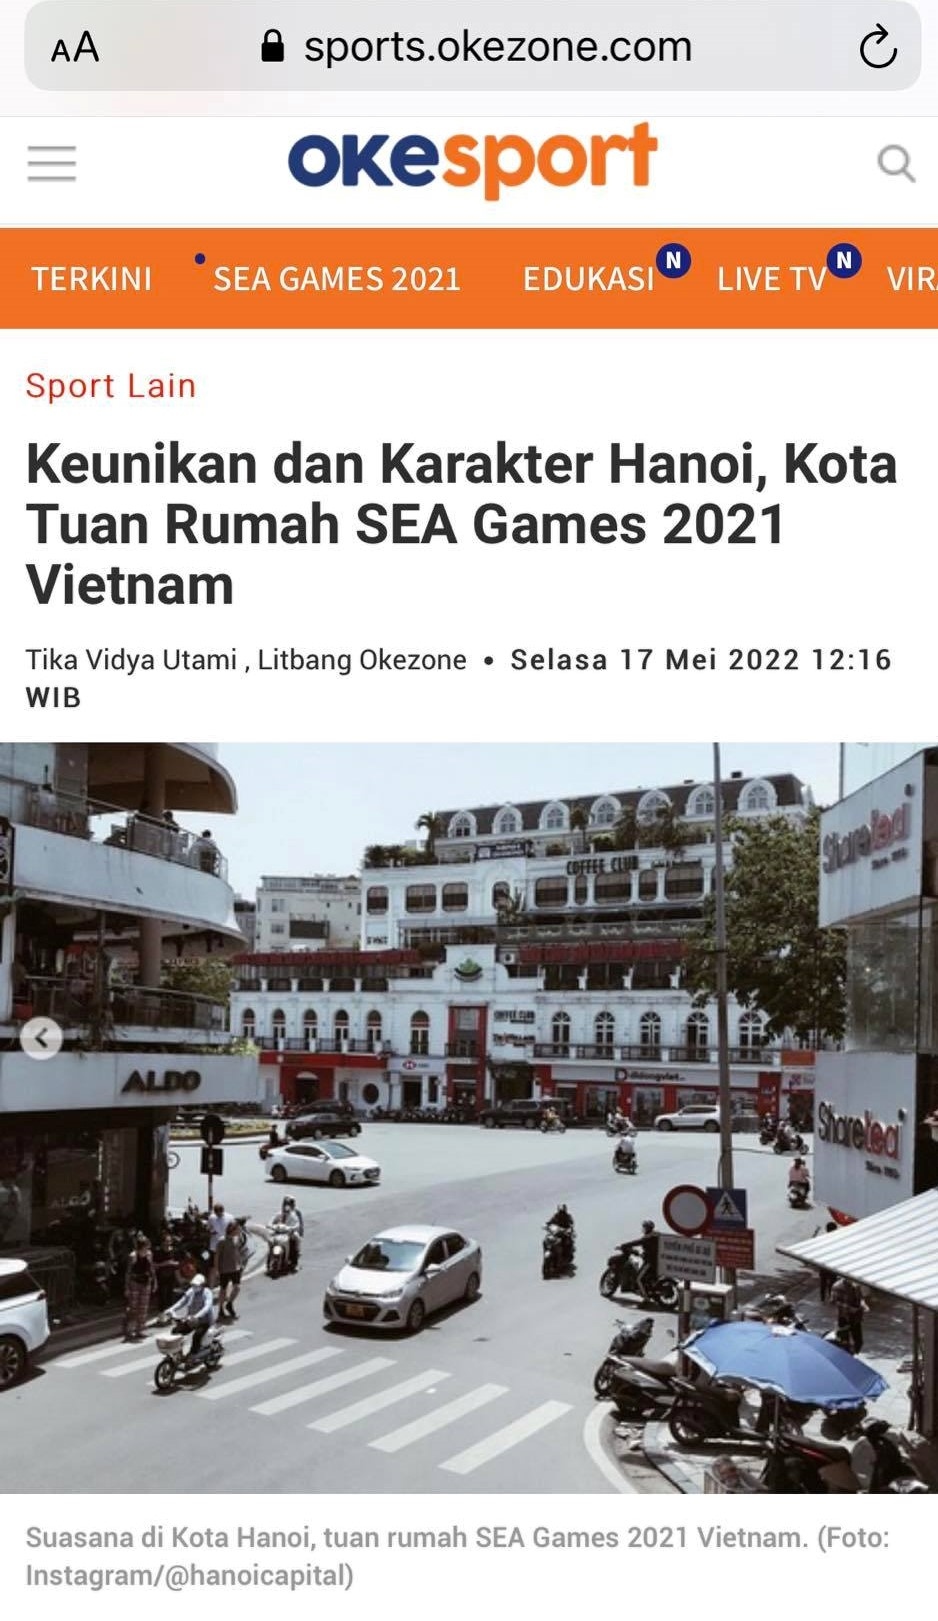 sea games 31 va an tuong ve ha noi trong mat phong vien indonesia hinh anh 1